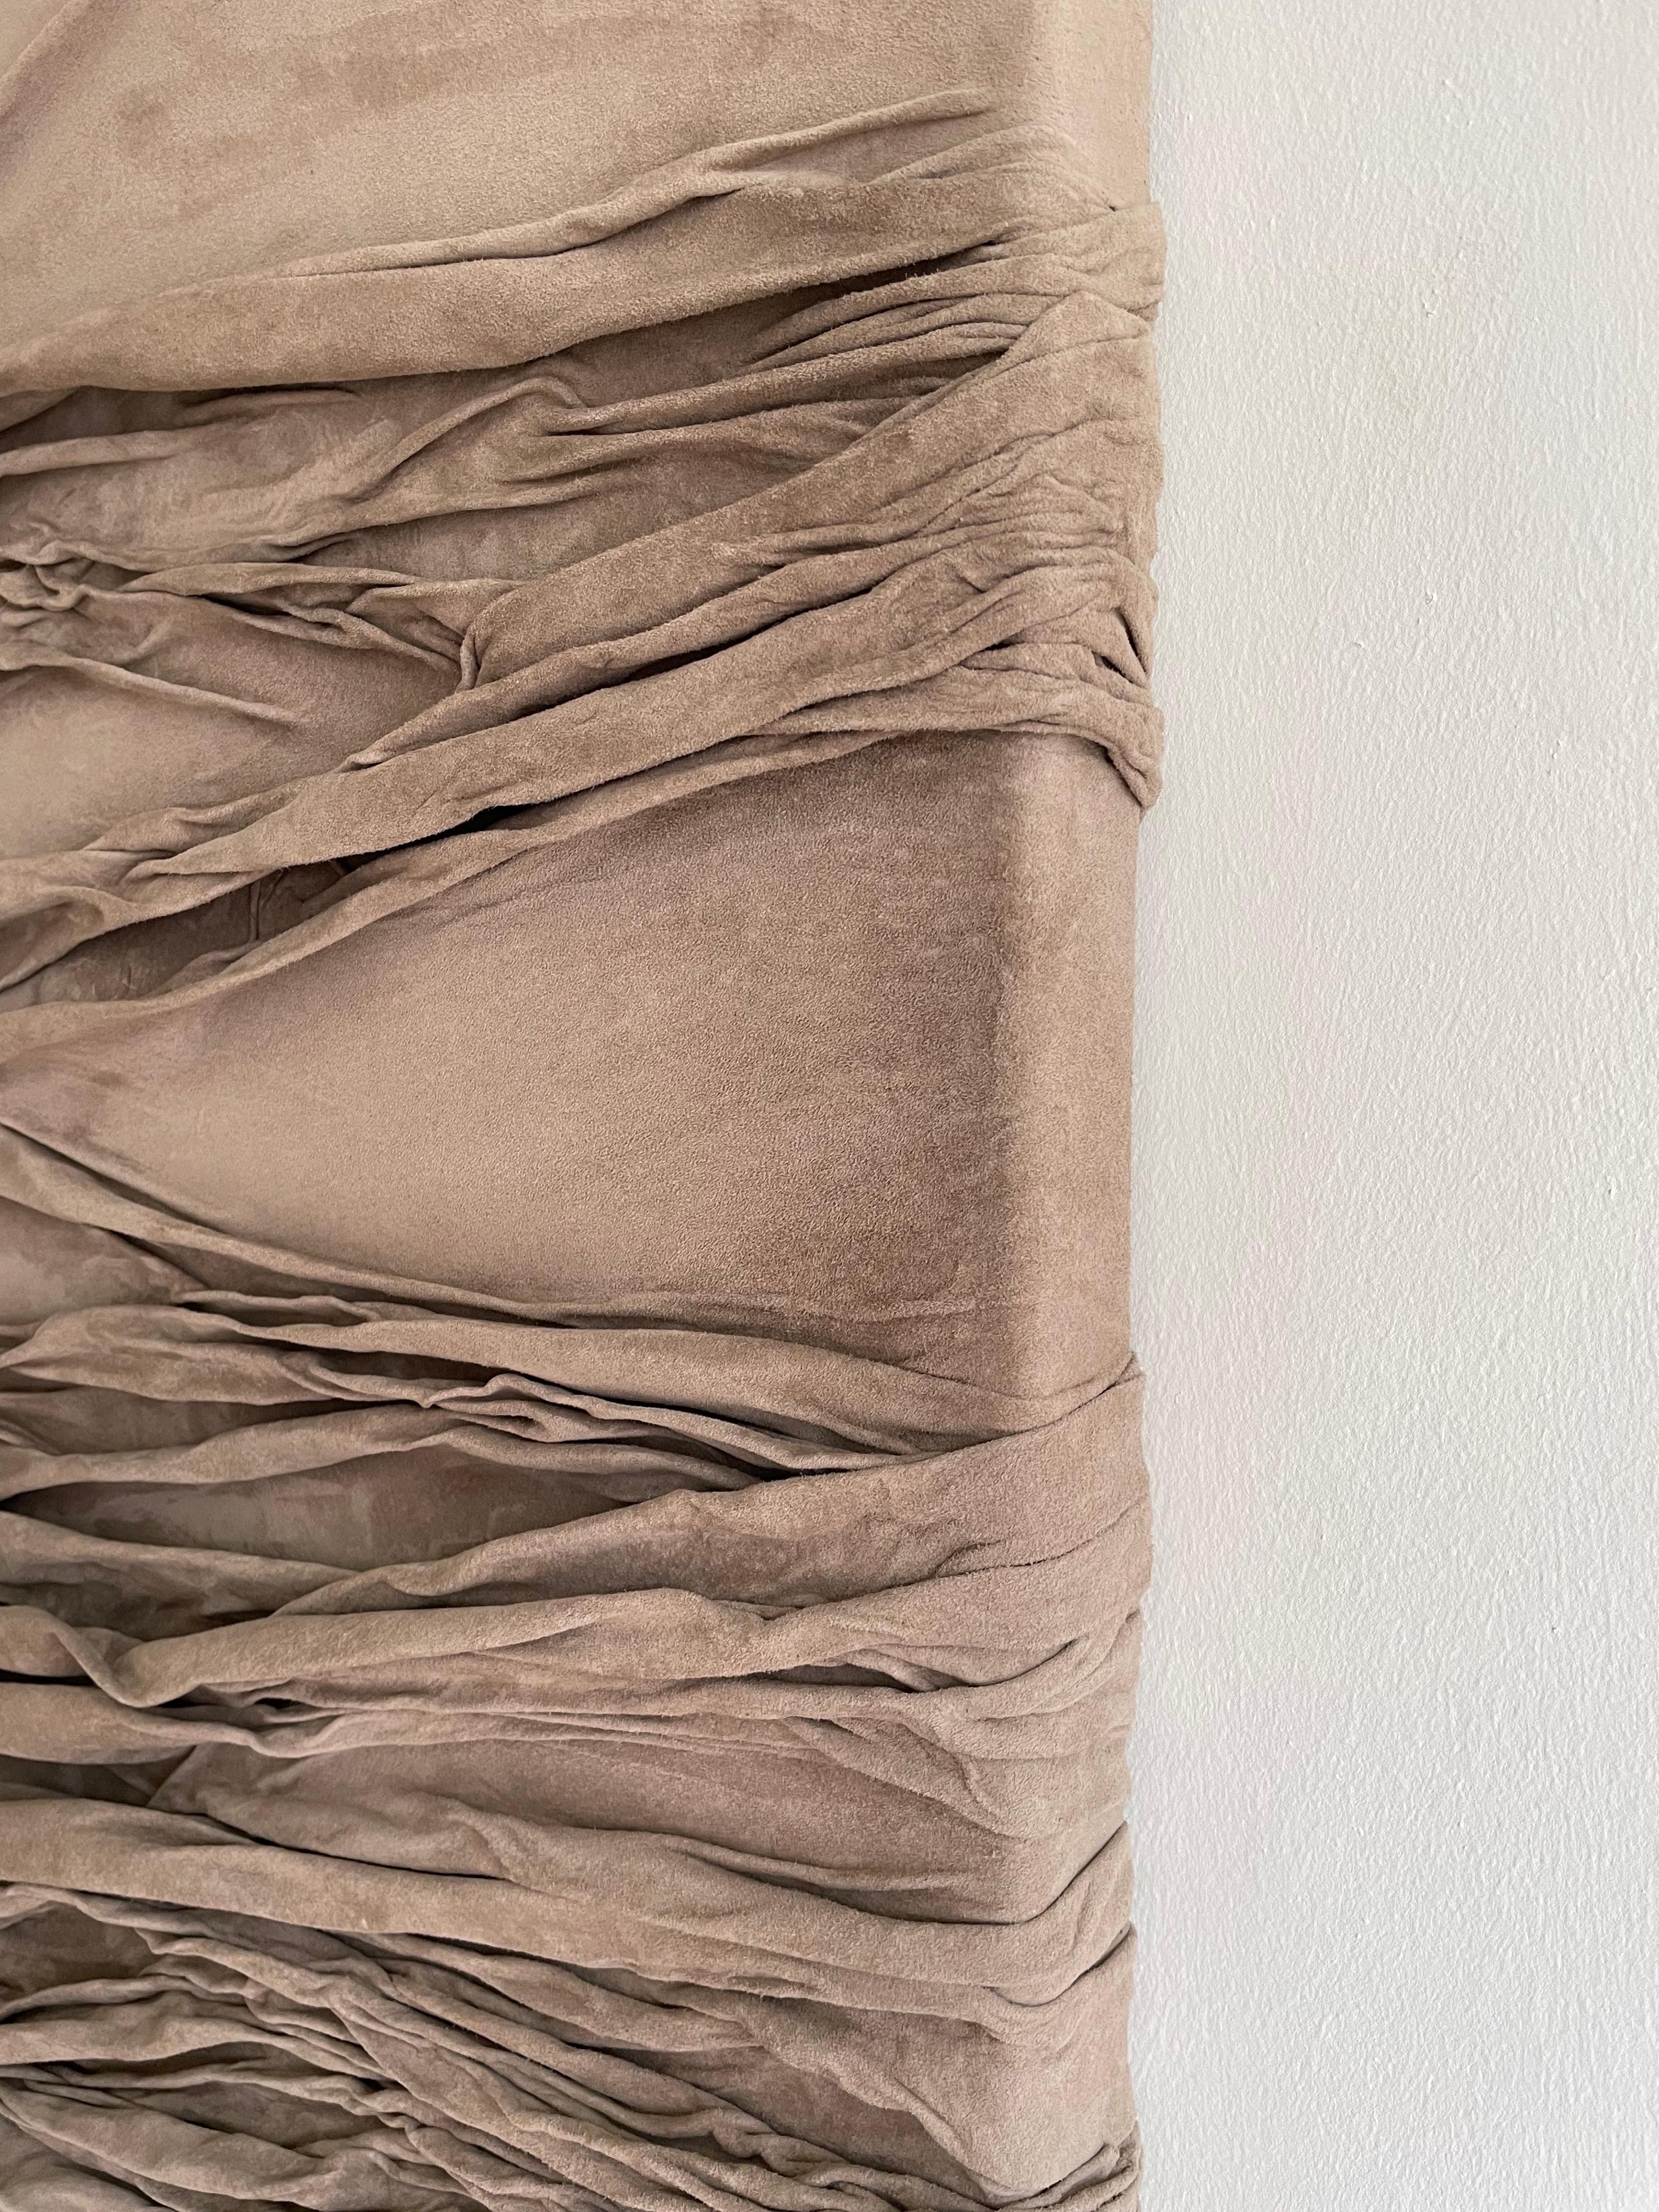 Contemporary Feminine Leather Draped Relief Artwork By Danish Benedicte Pedersen For Sale 2